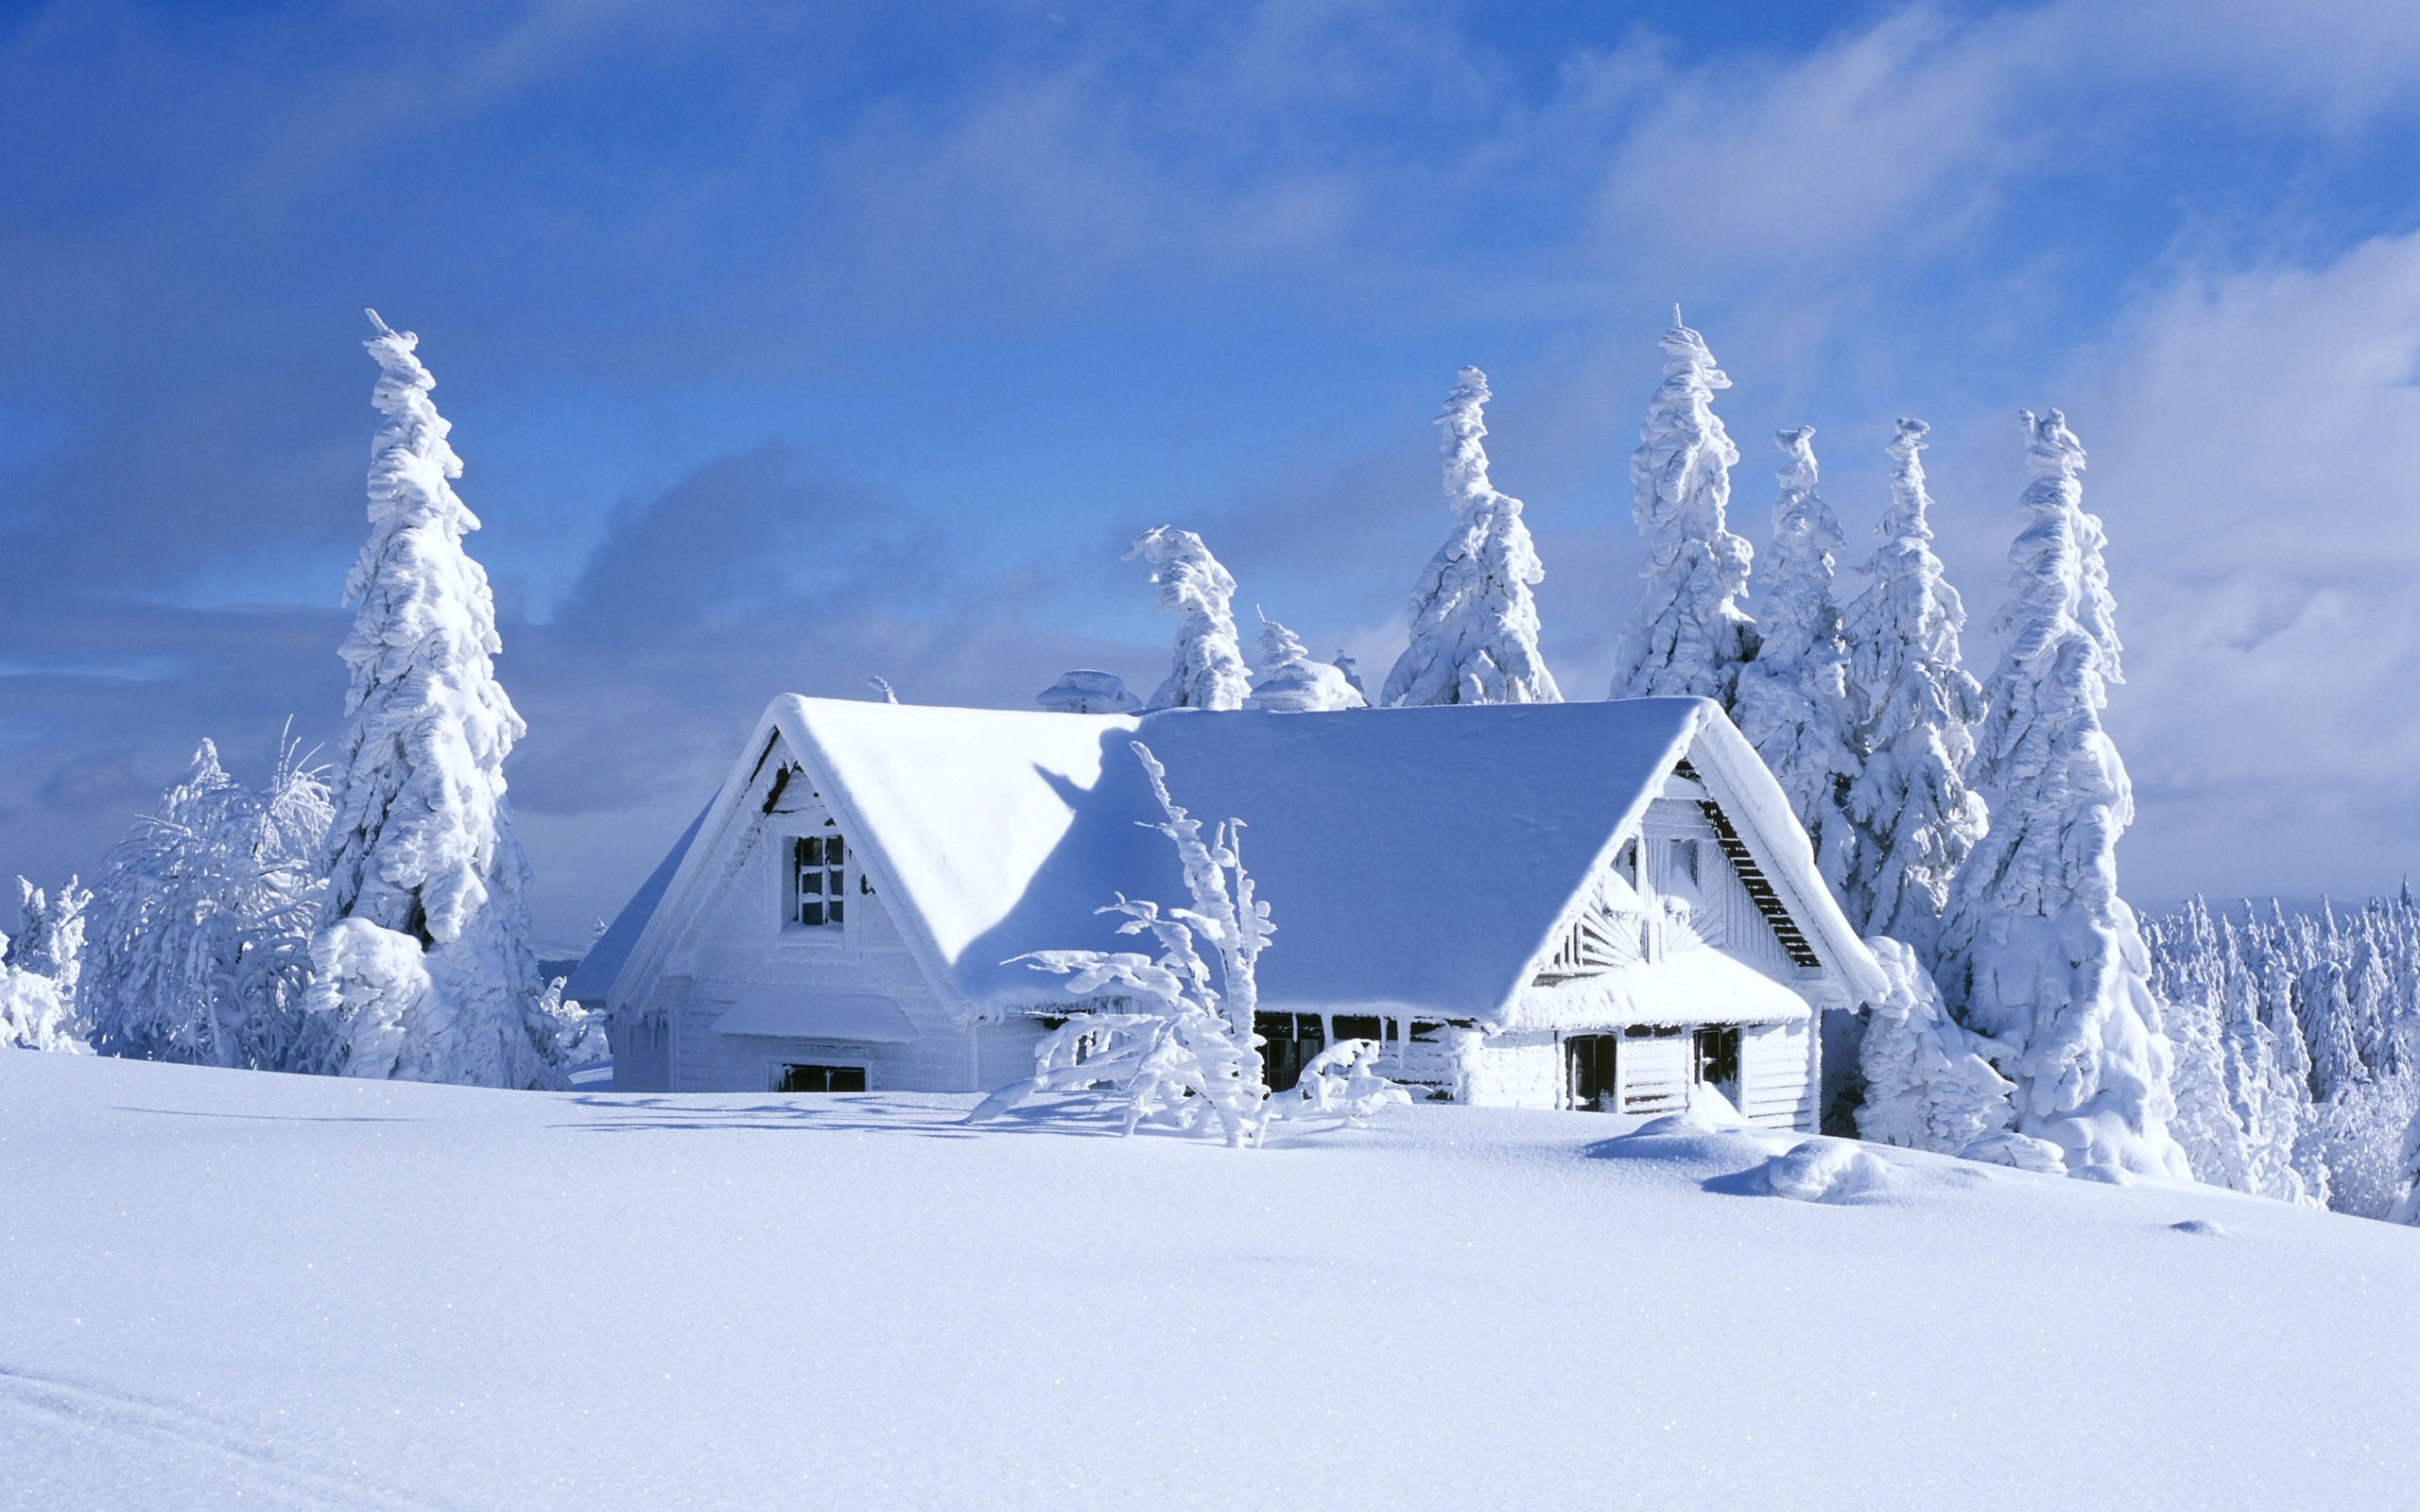 winter house wallpaper picture in hd desktop download